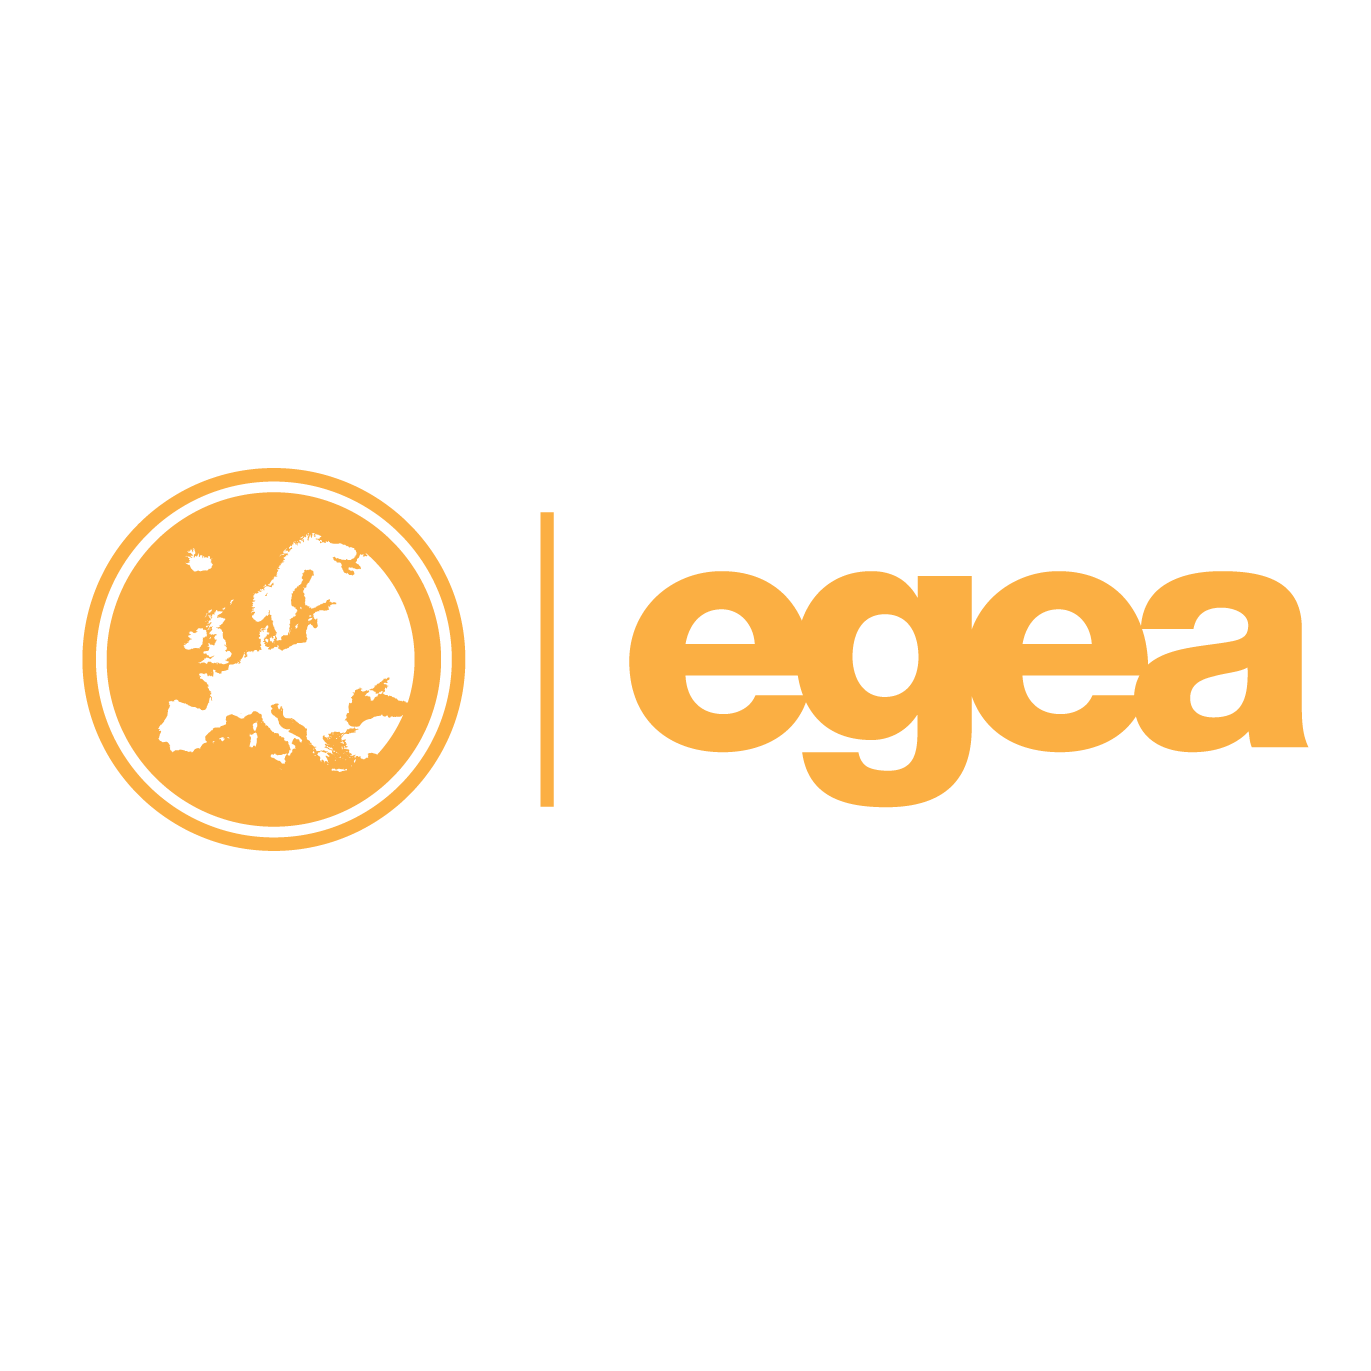 European Geography Association